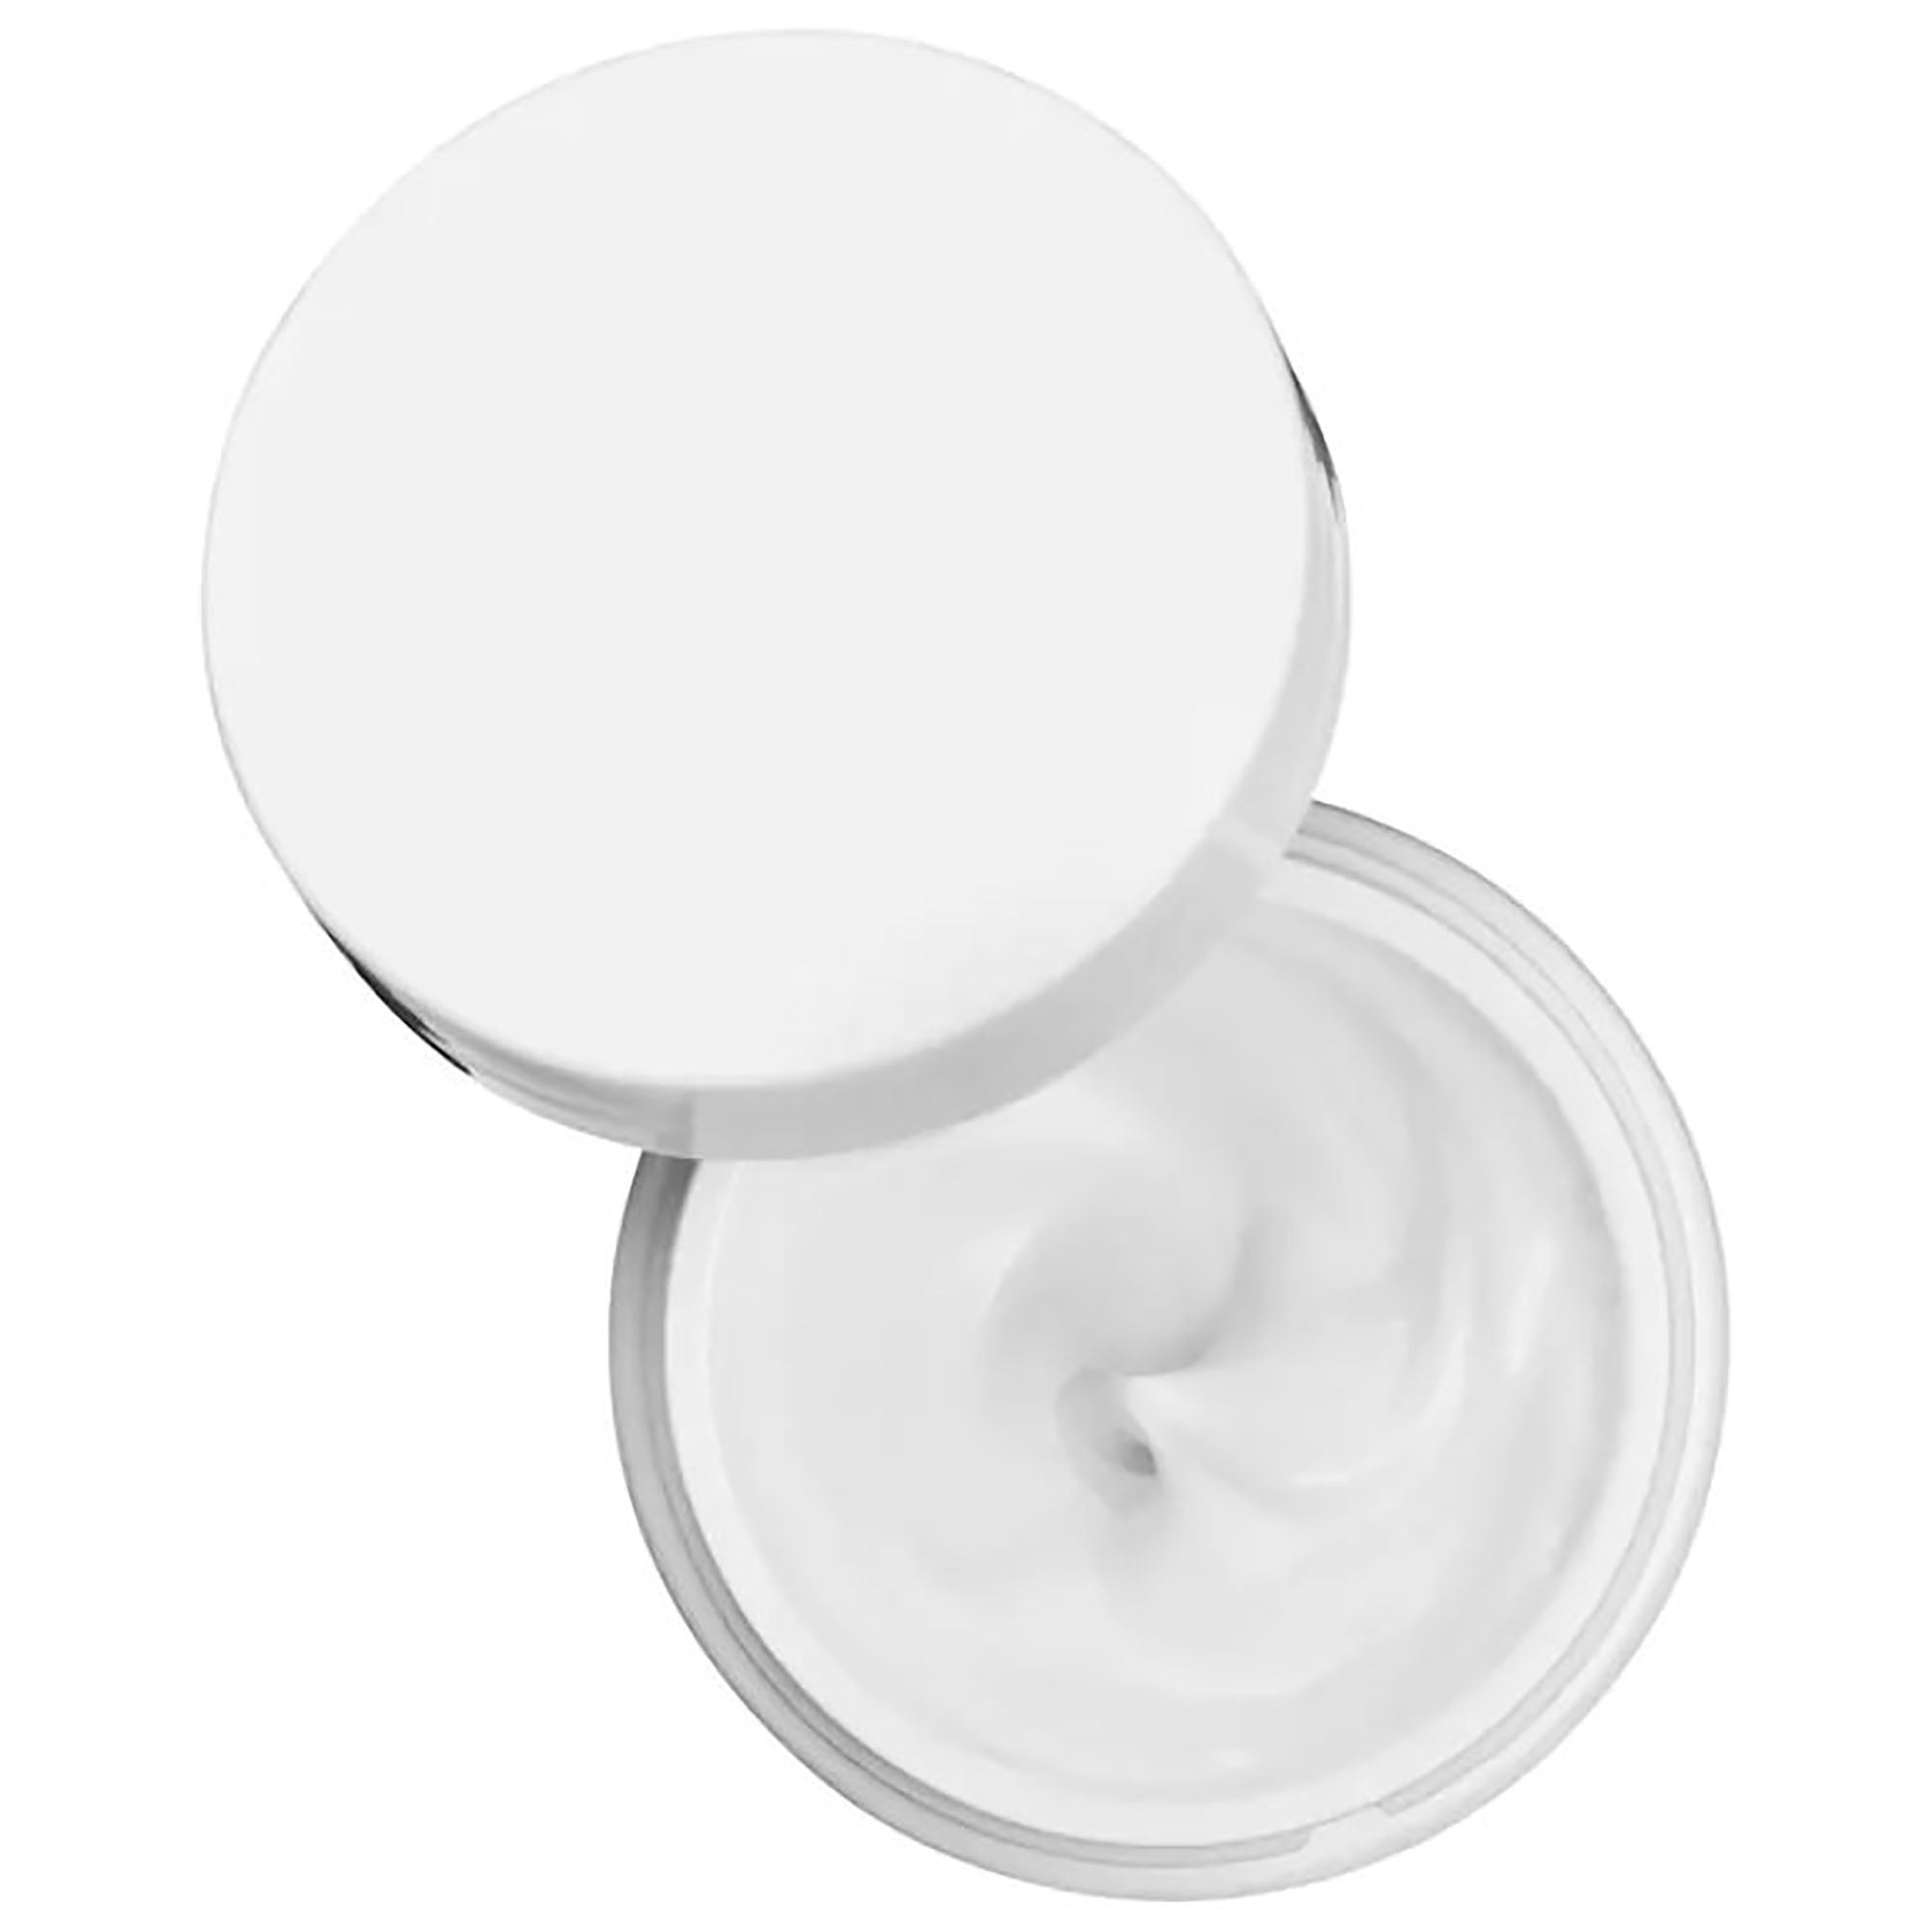 Kiehl's Ultra Facial Cream SPF 30 - 4oz / 4OZ